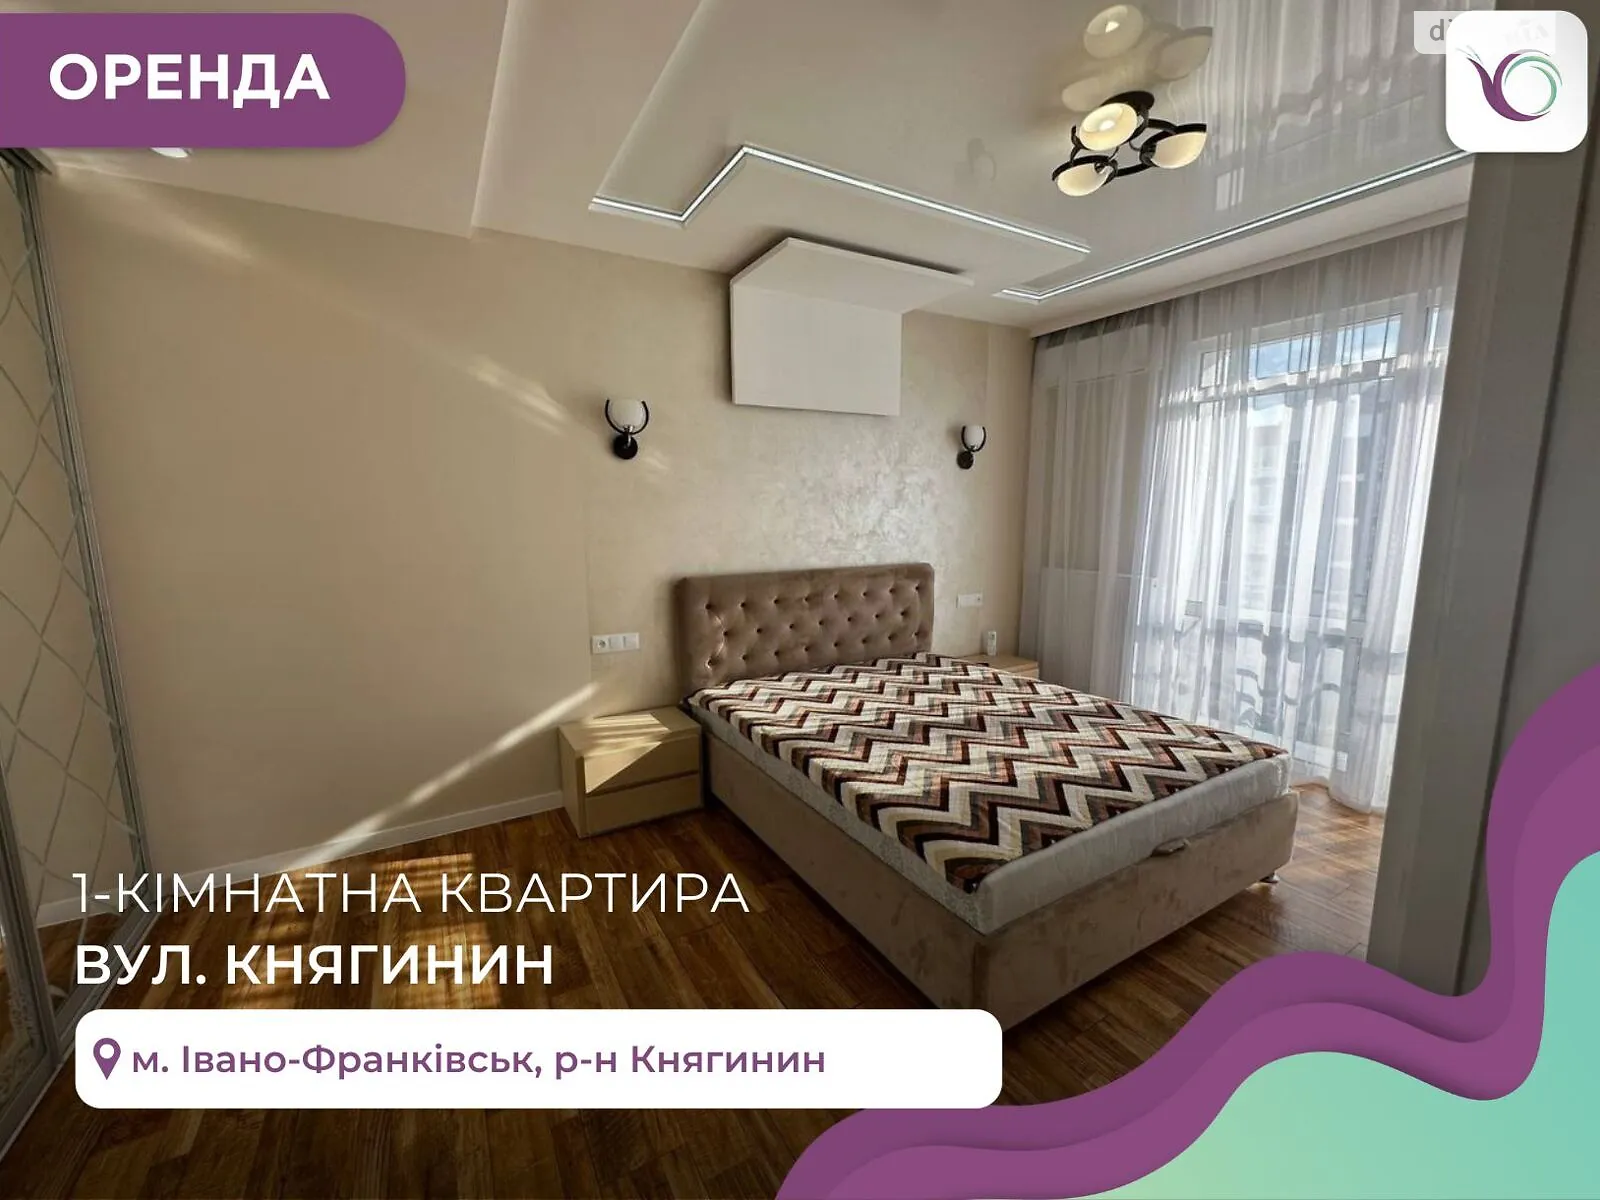 Сдается в аренду 1-комнатная квартира 50 кв. м в Ивано-Франковске, ул. Княгинин - фото 1